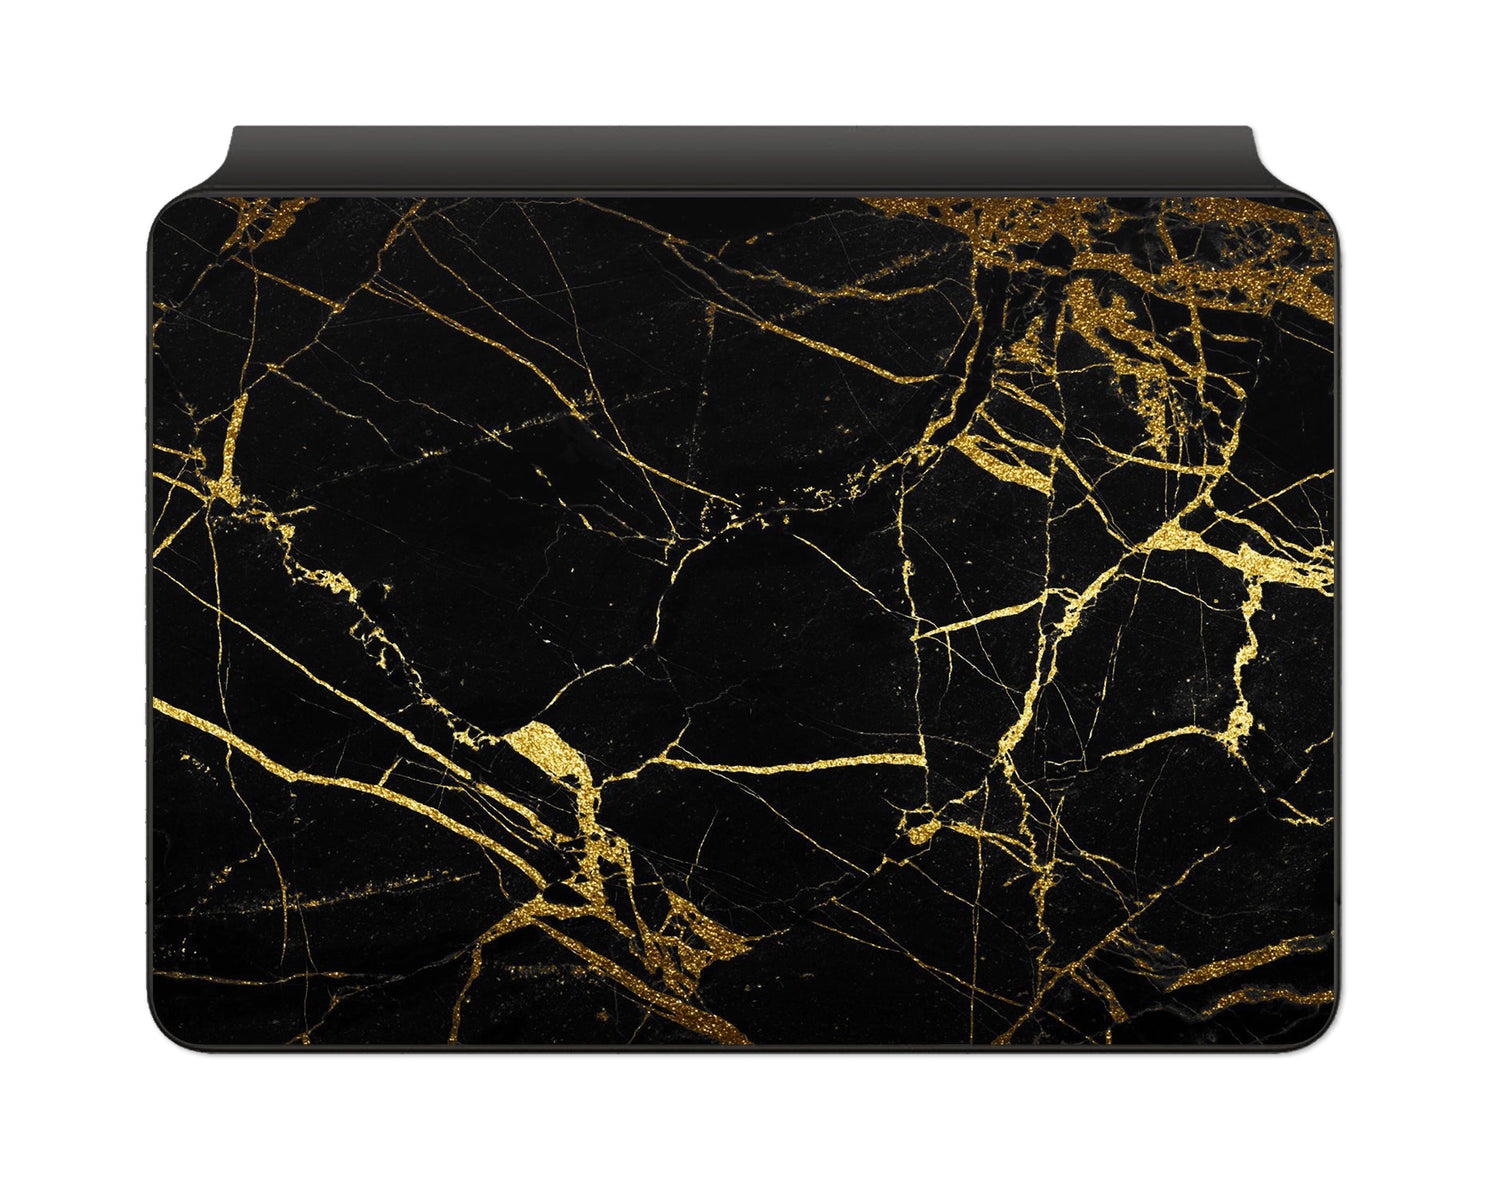 Lux Skins Magic Keyboard Black Gold Marble iPad Air Skins - Pattern Marble Skin